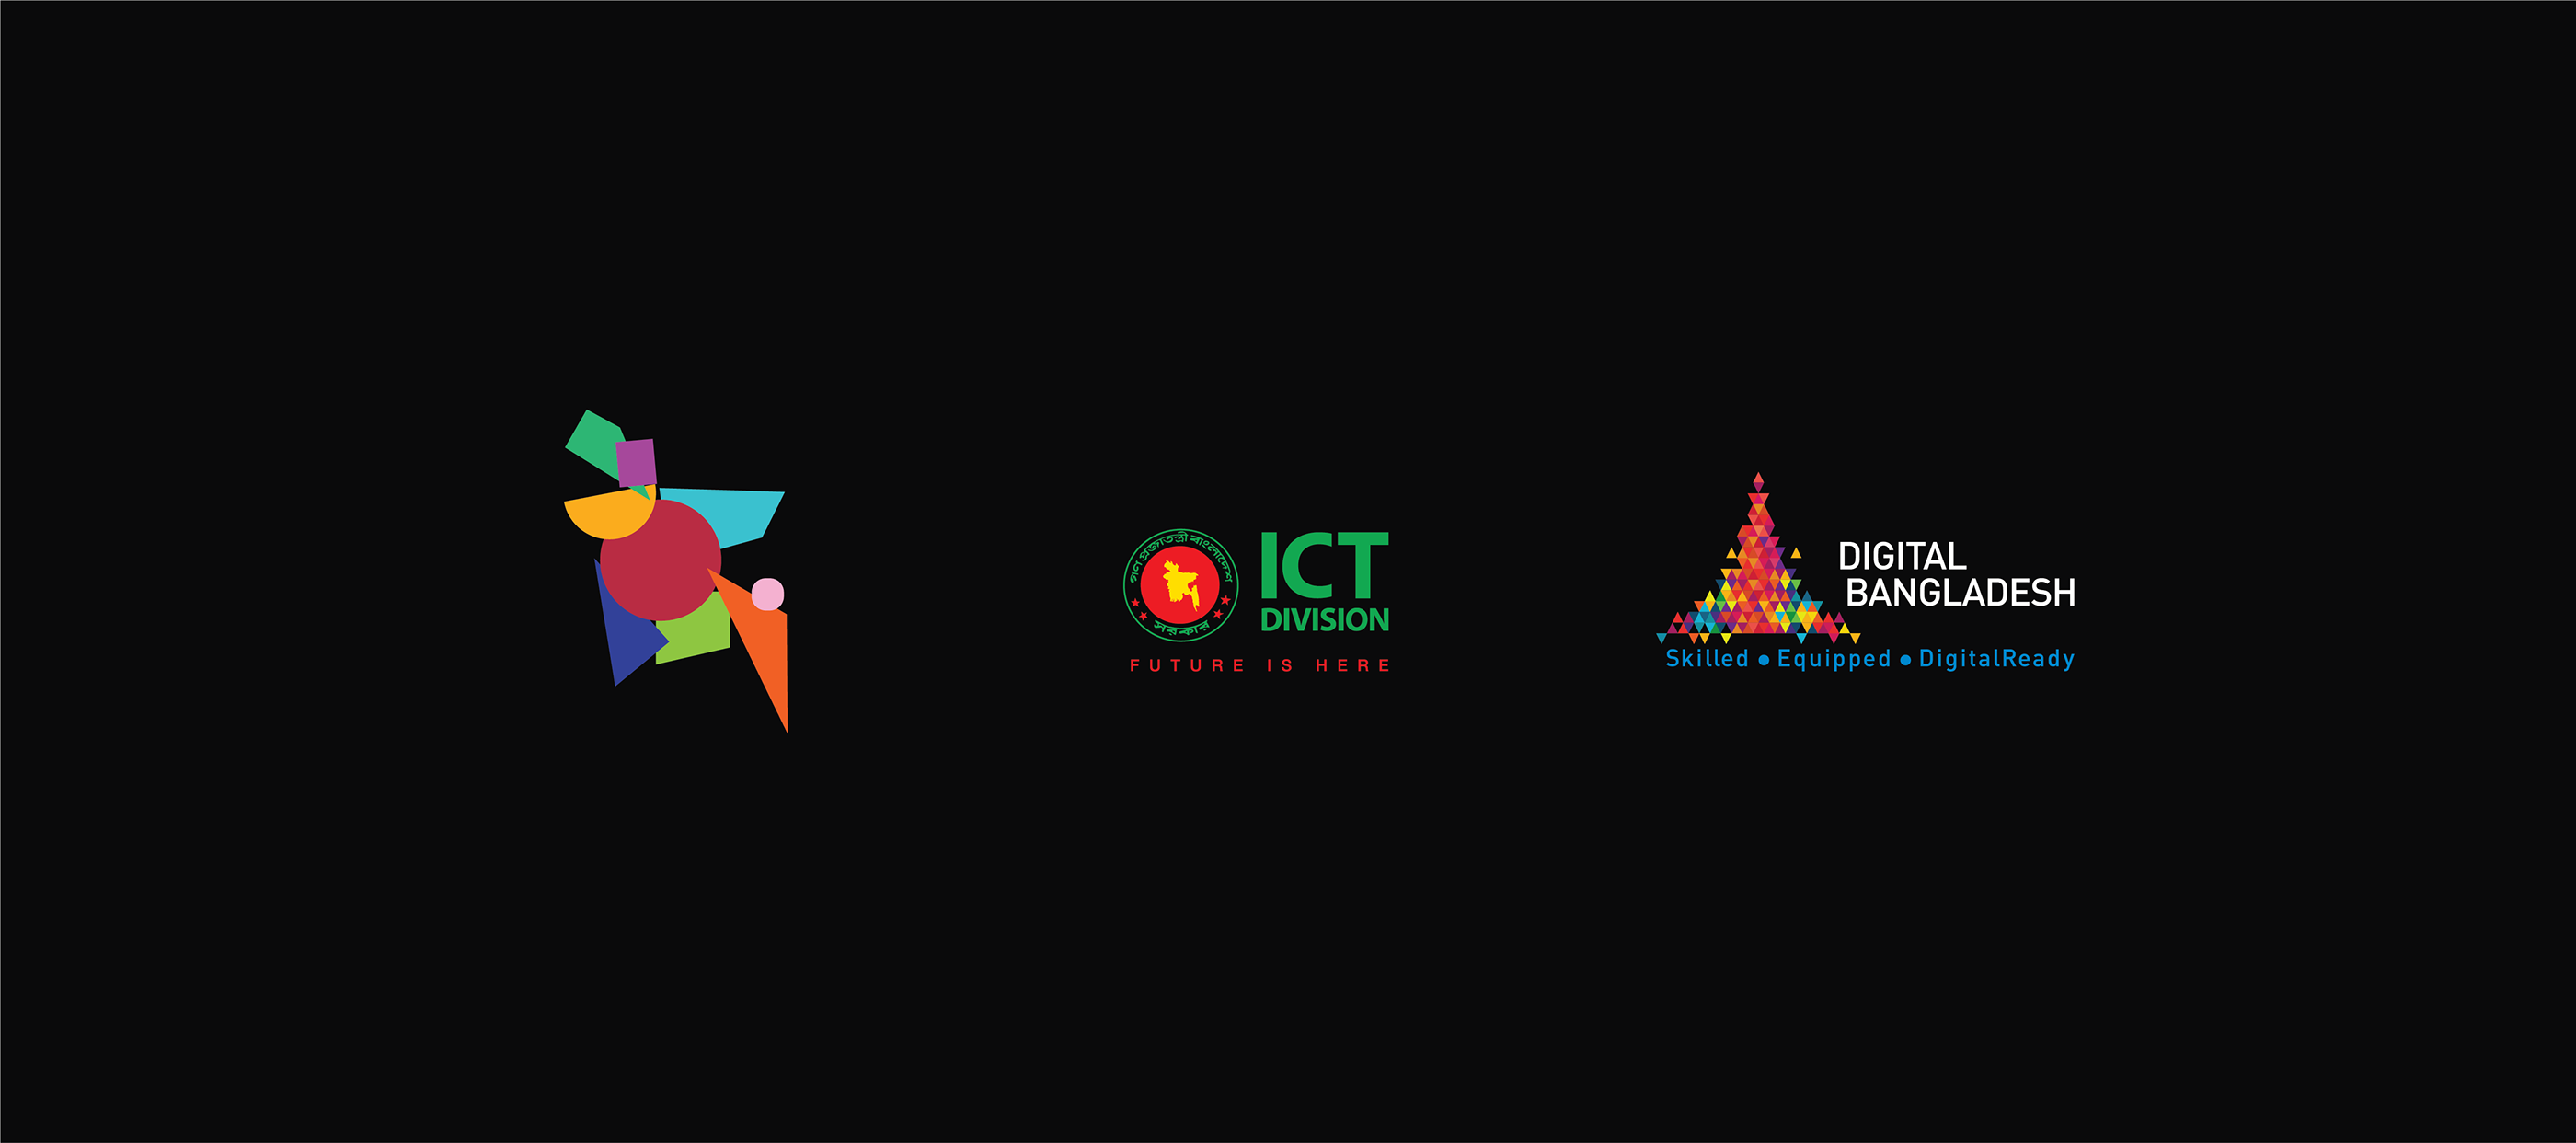 BCS ICT Awards